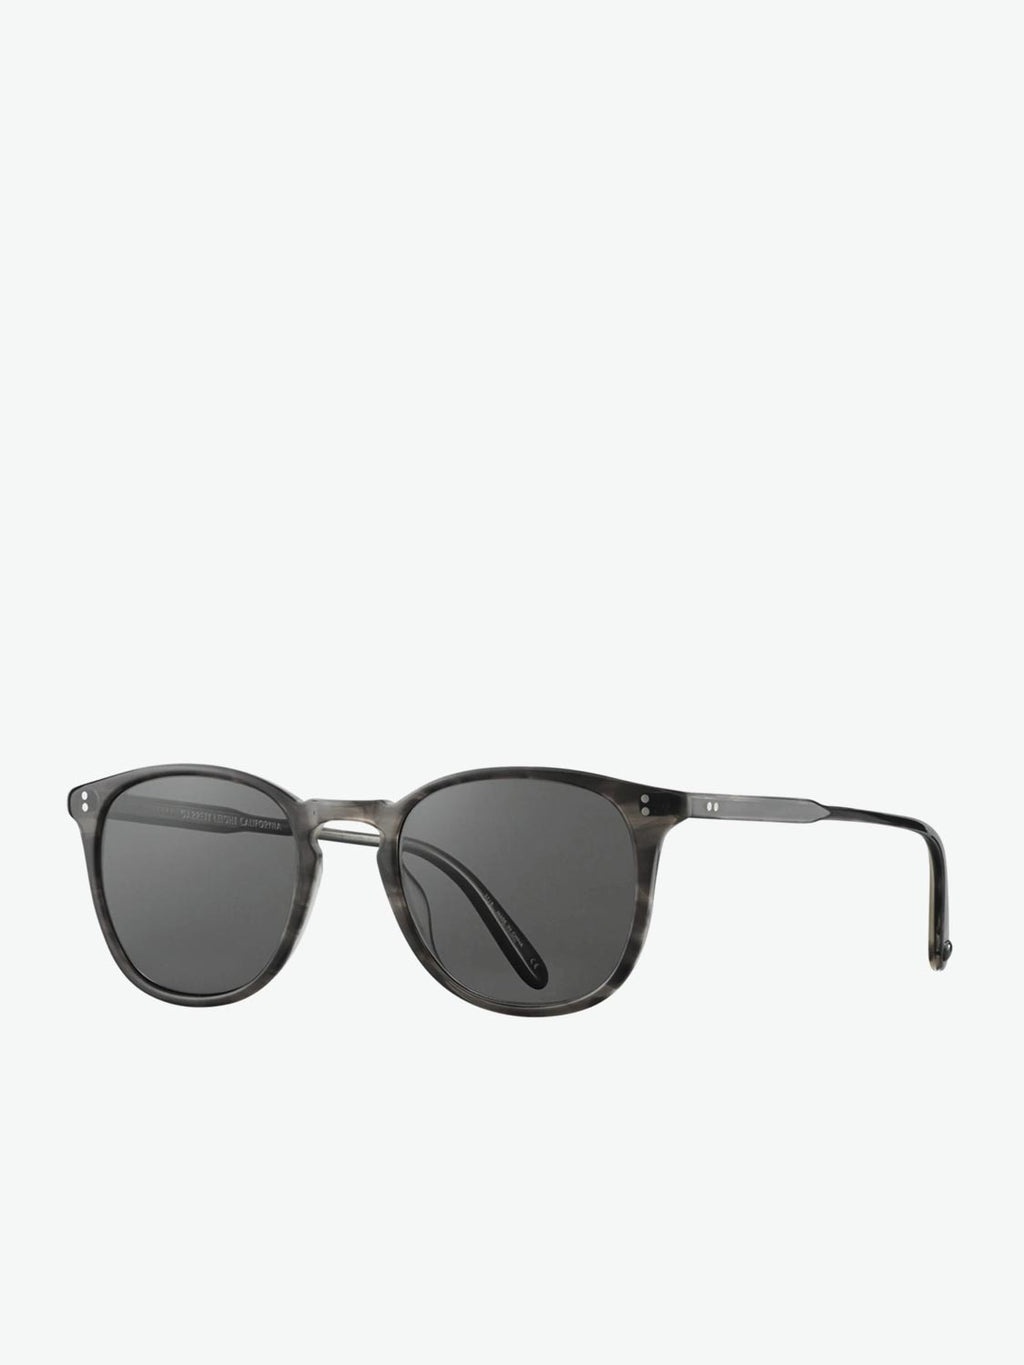 Garrett Leight California | Men's Eyewear and Sunglasses